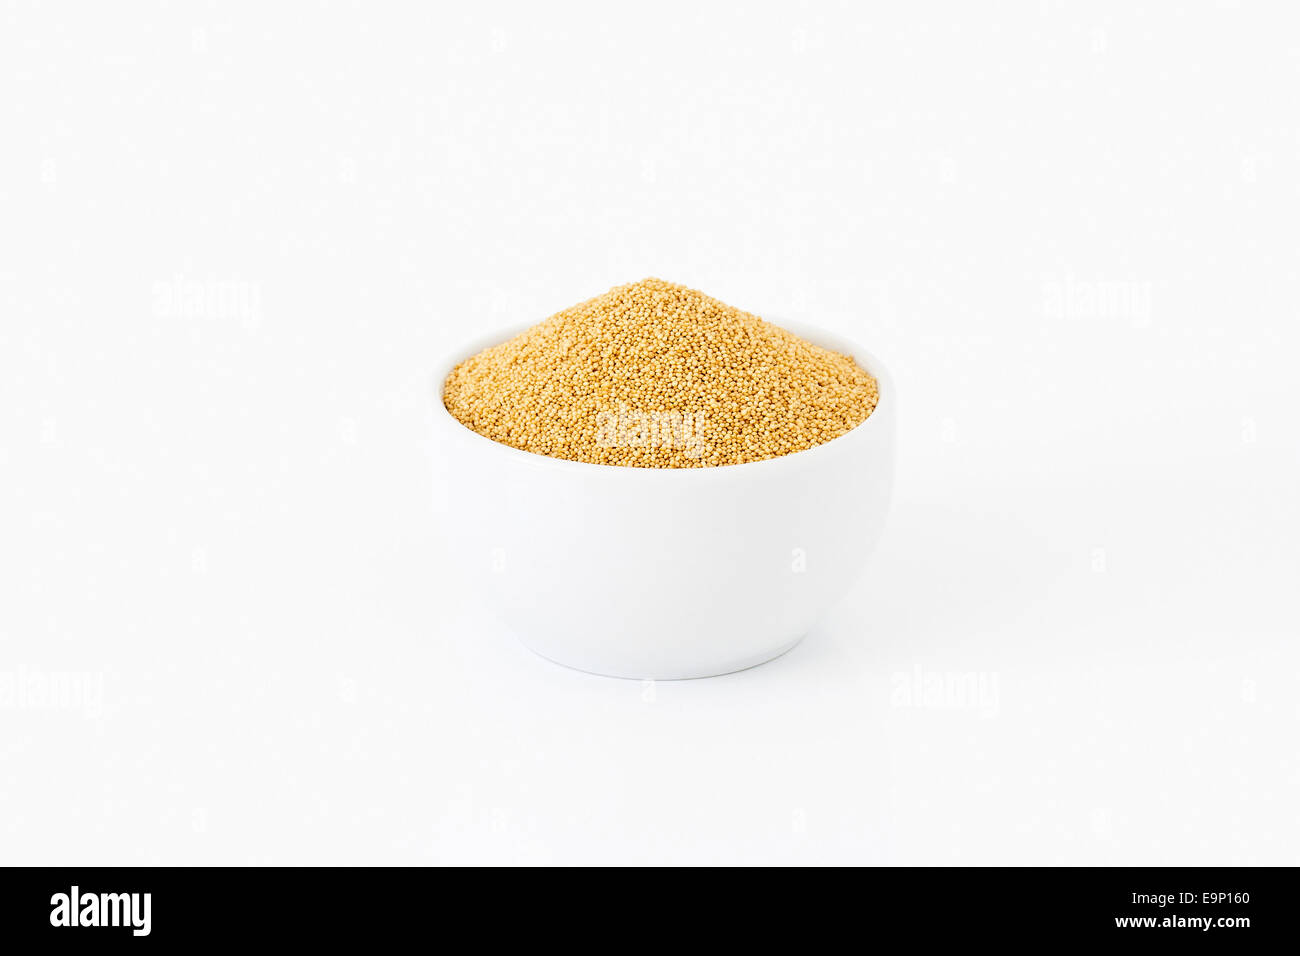 Quinoa seeds on white background Stock Photo